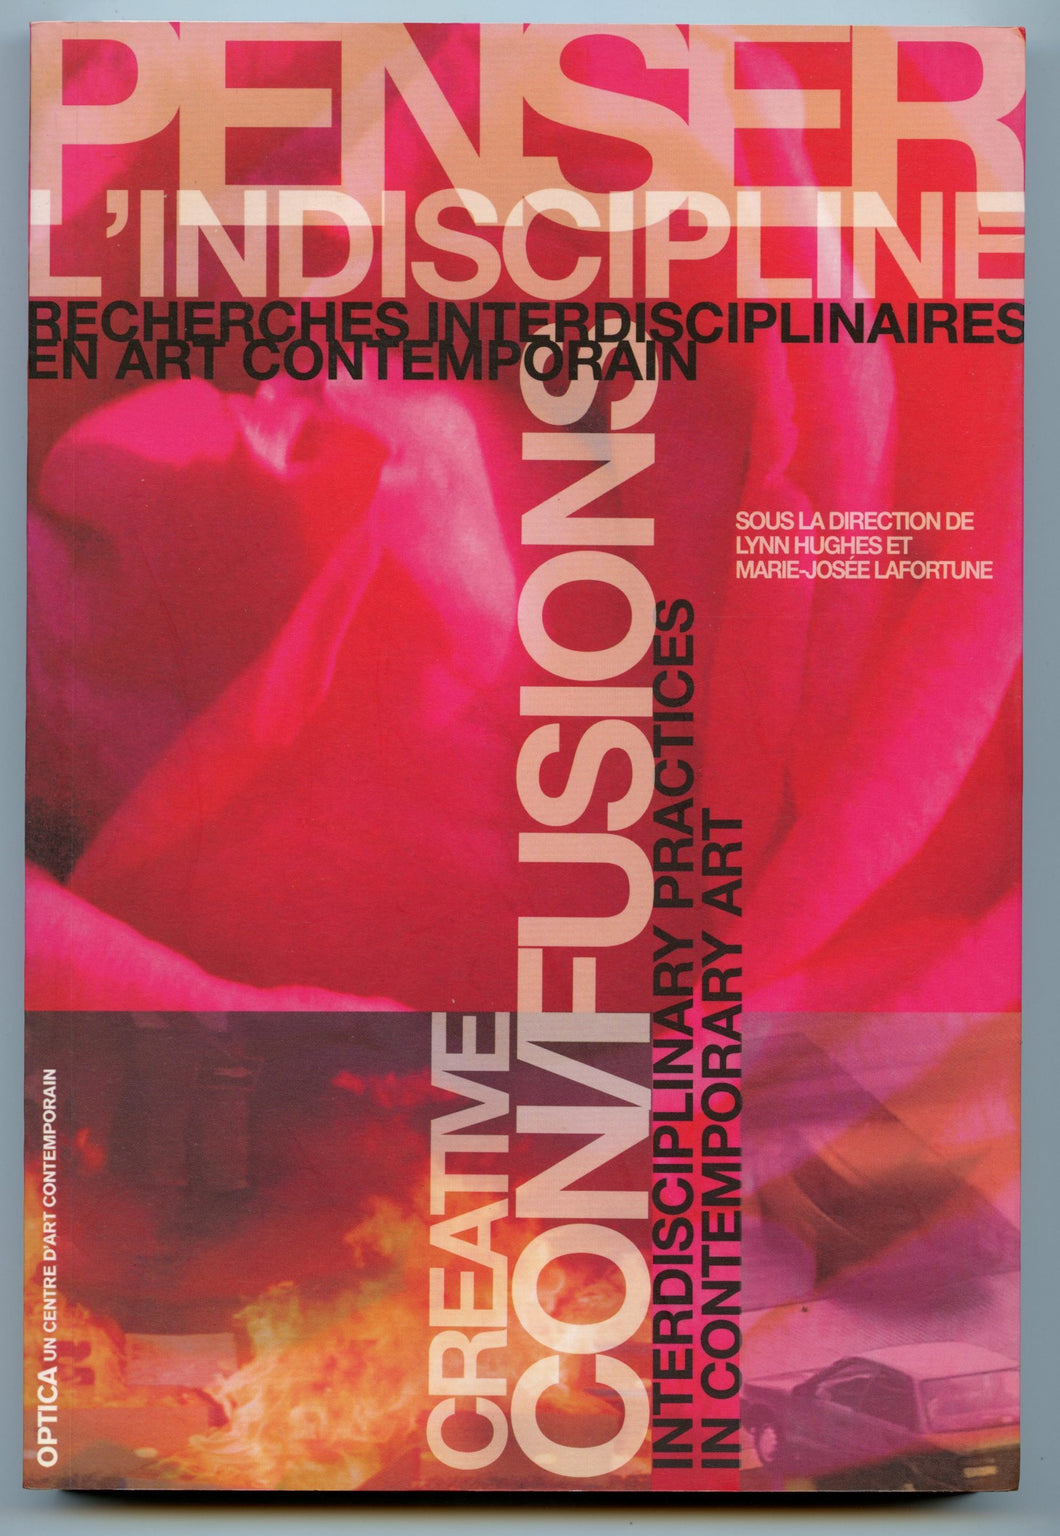 Penser L'Indiscipline: Recherches Interdisciplinaires en Art Contemporain / Creative Con/Fusions: Interdisciplinary Practices in Contemporary Art